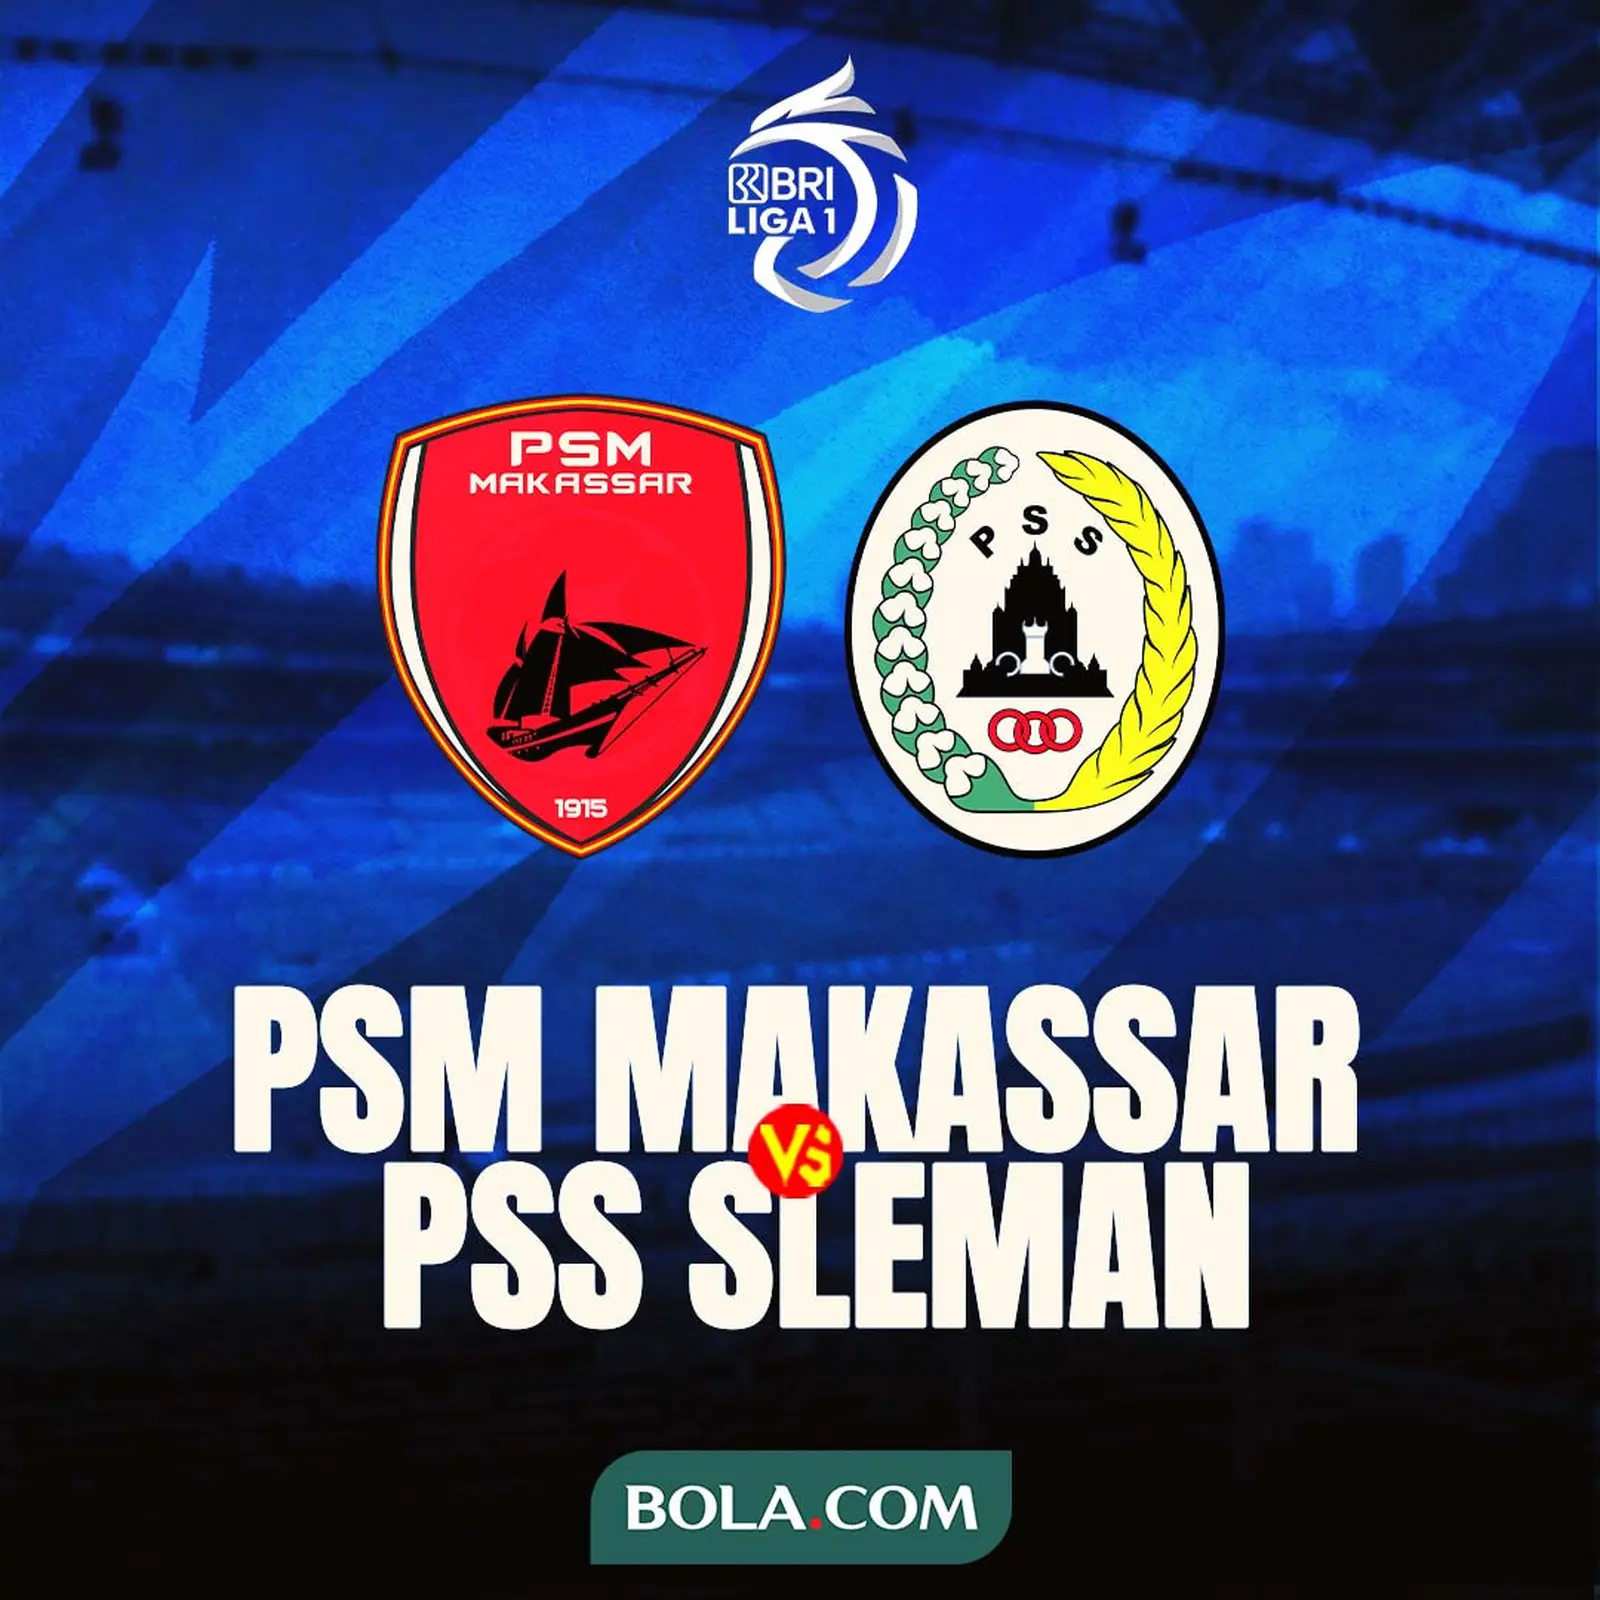 BRI Liga 1 - PSM Makassar Vs PSS Sleman